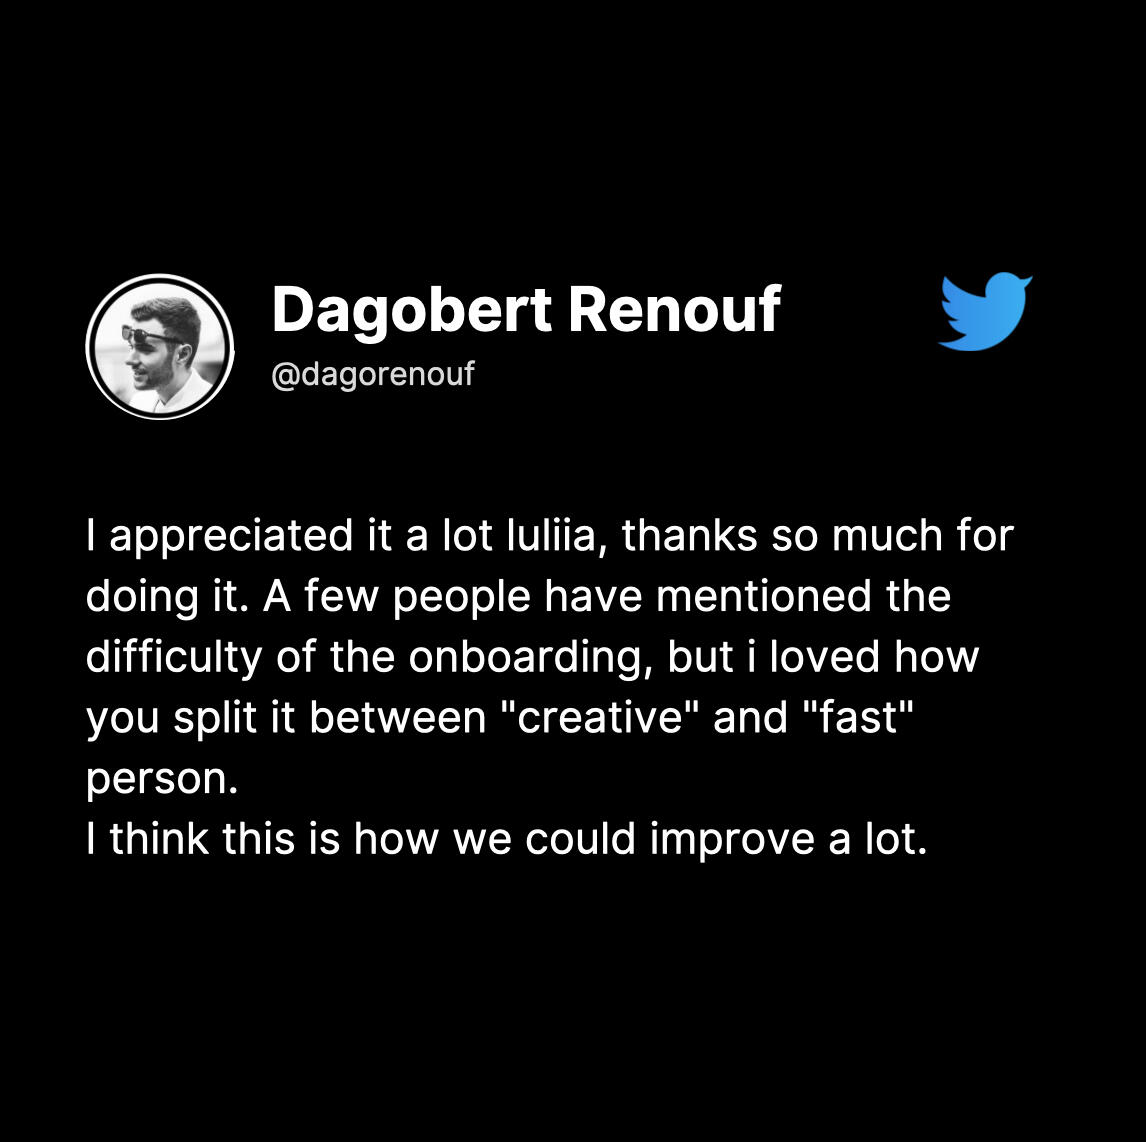 Dagobert feedback